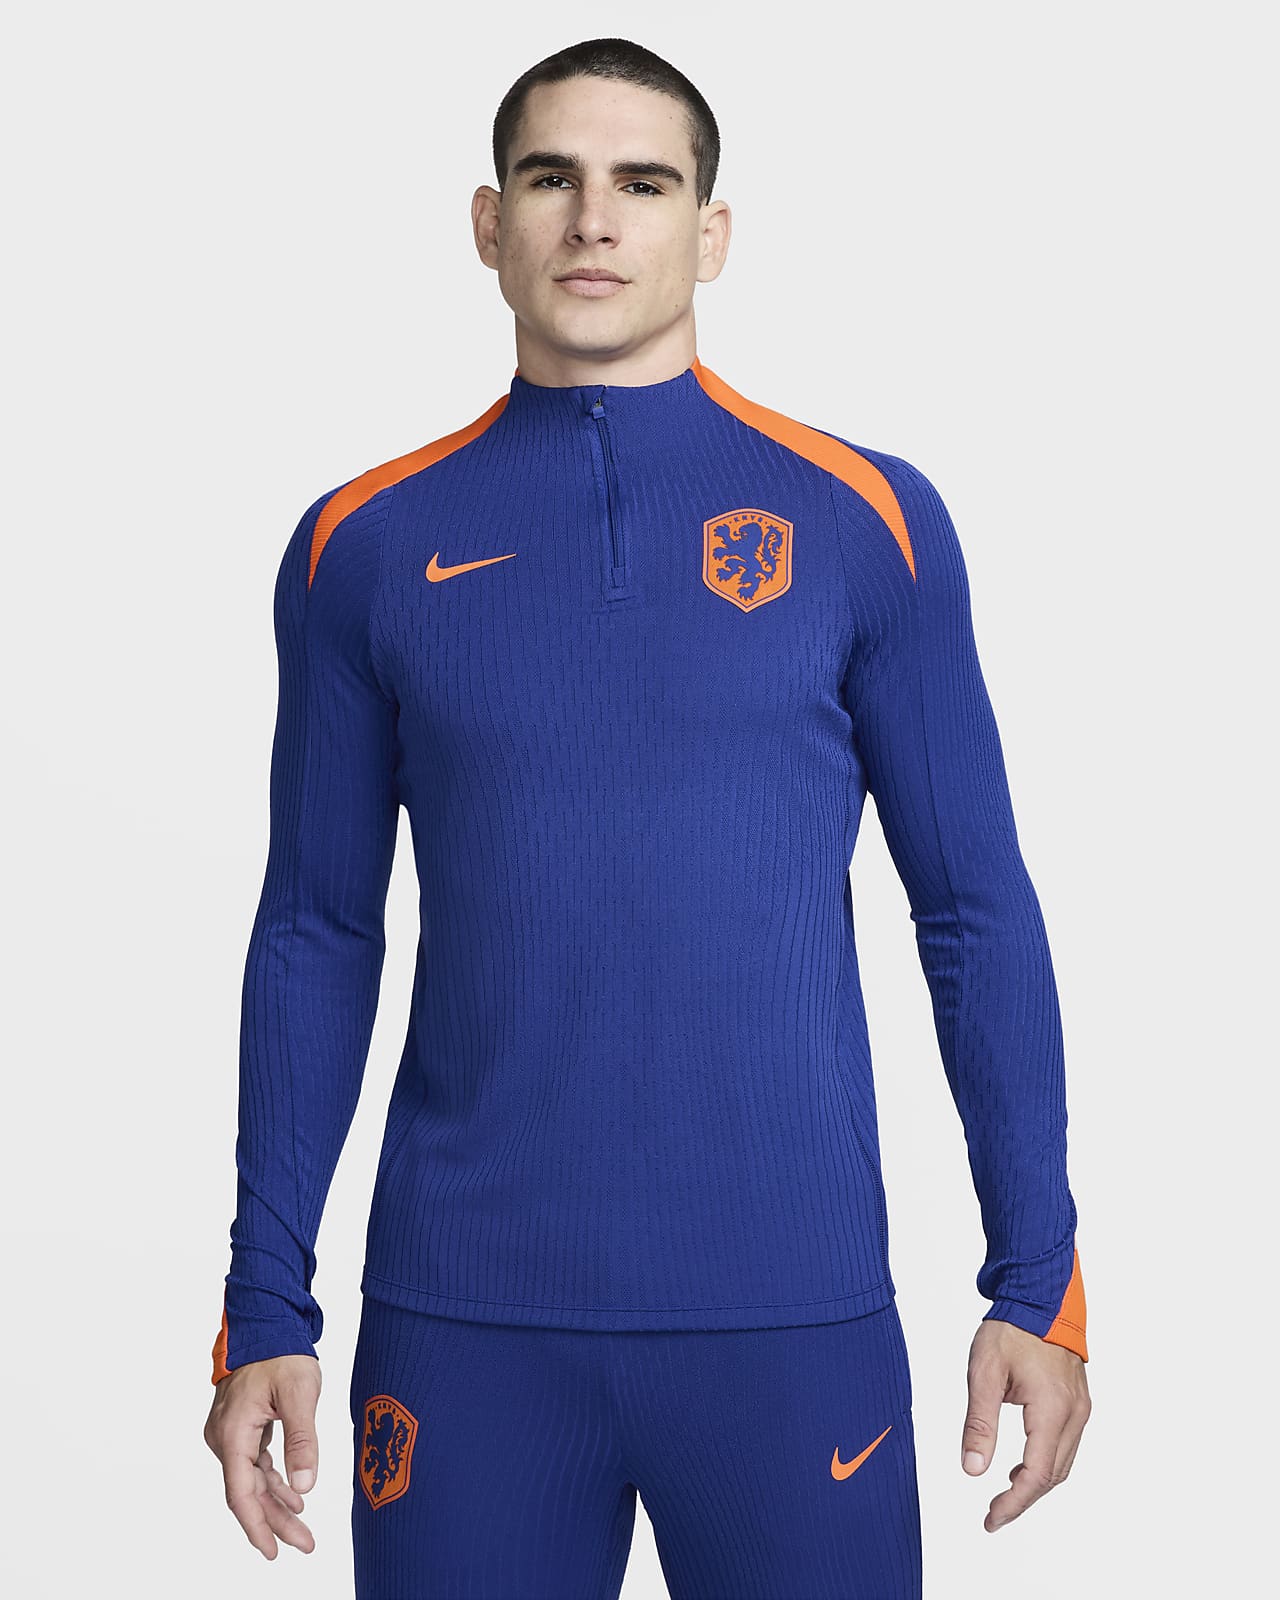 Netherlands Strike Elite Men's Nike Dri-FIT ADV Football Knit Drill Top